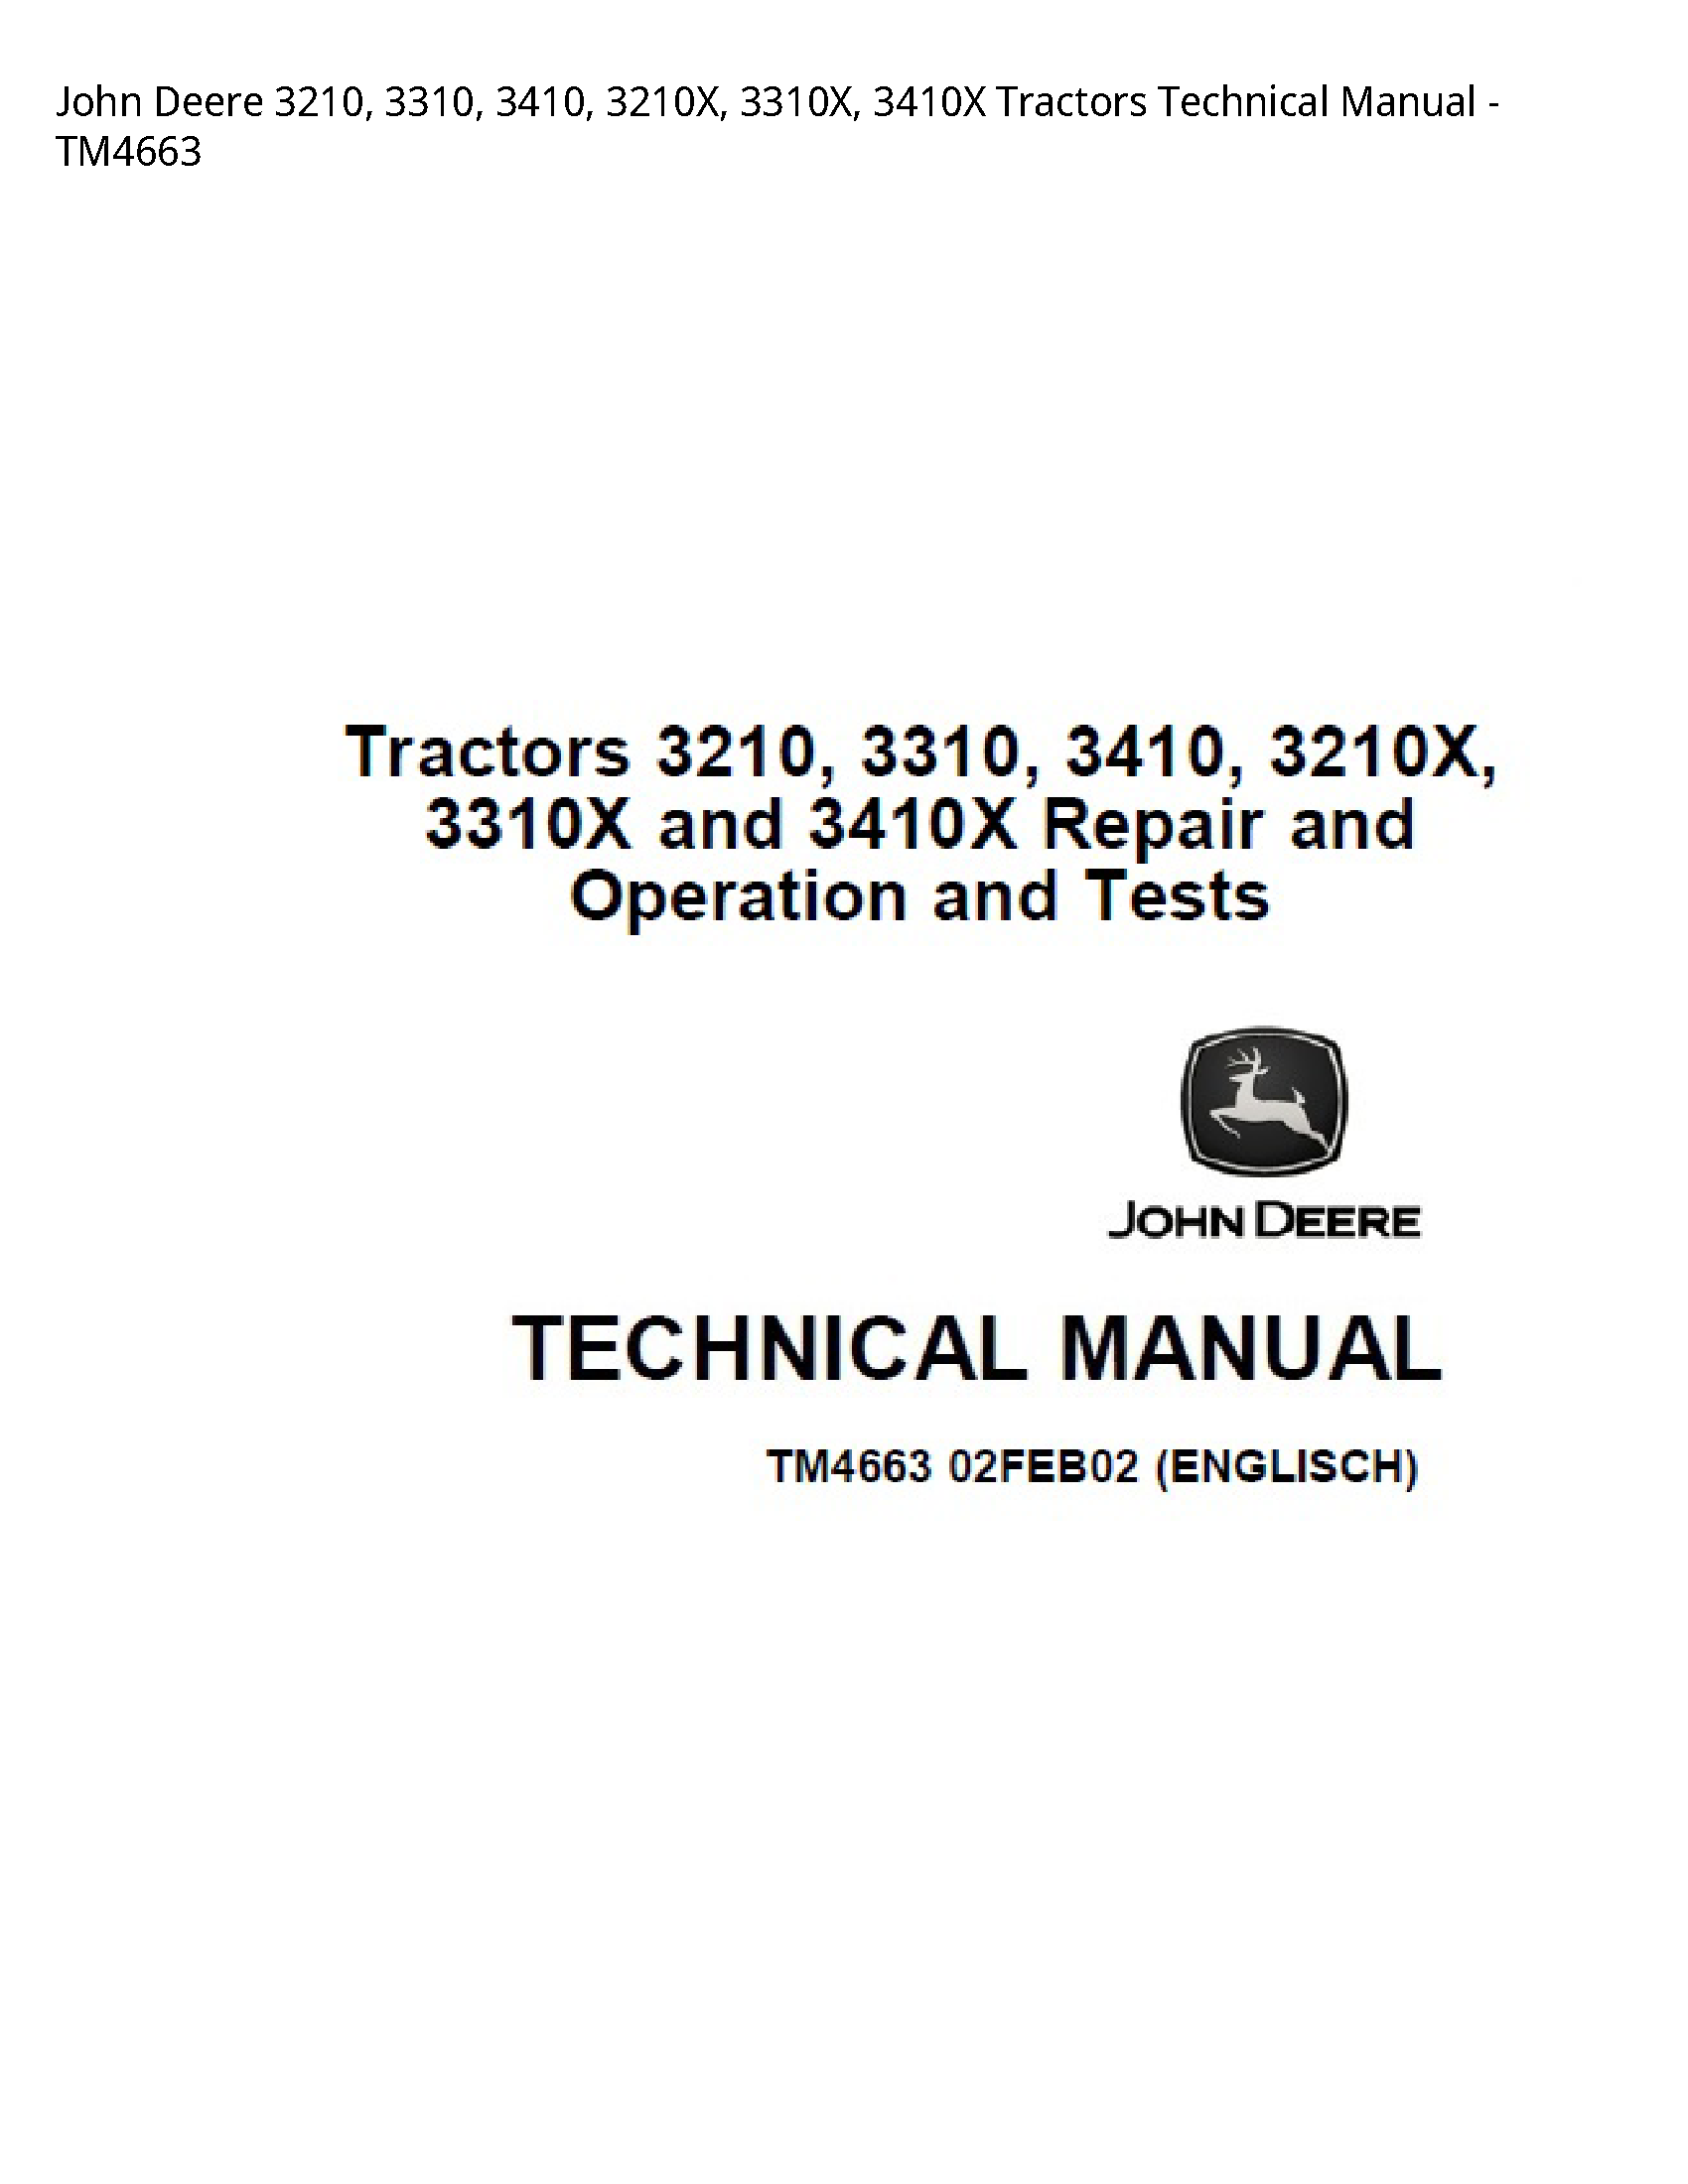 John Deere 3210 Tractors Technical manual